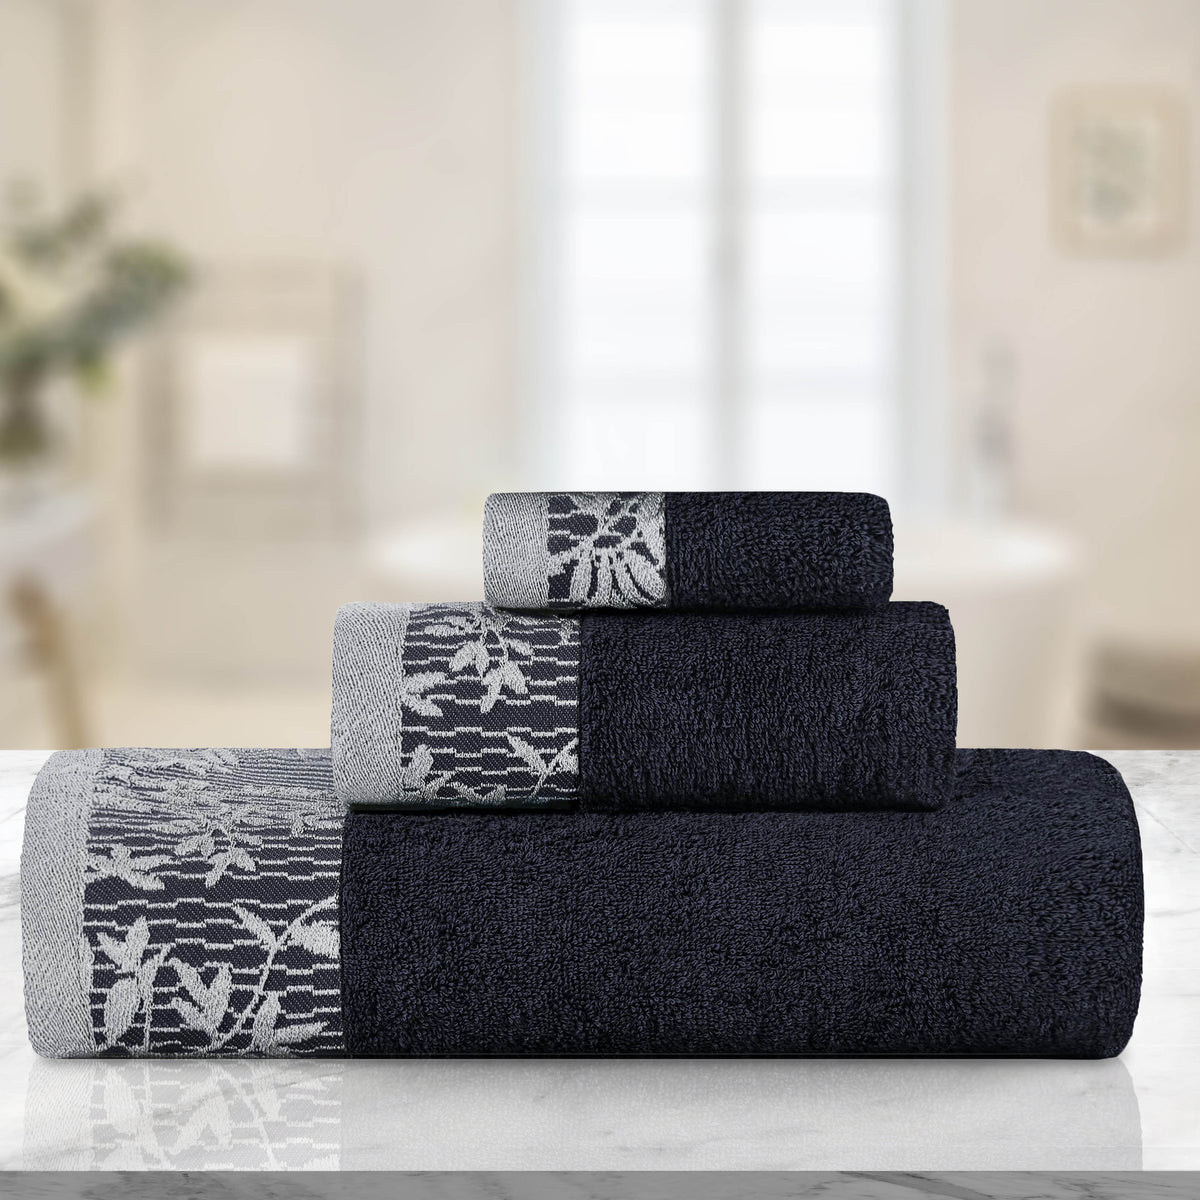 Superior Wisteria Cotton Floral Jacquard 3 Piece Towel Set